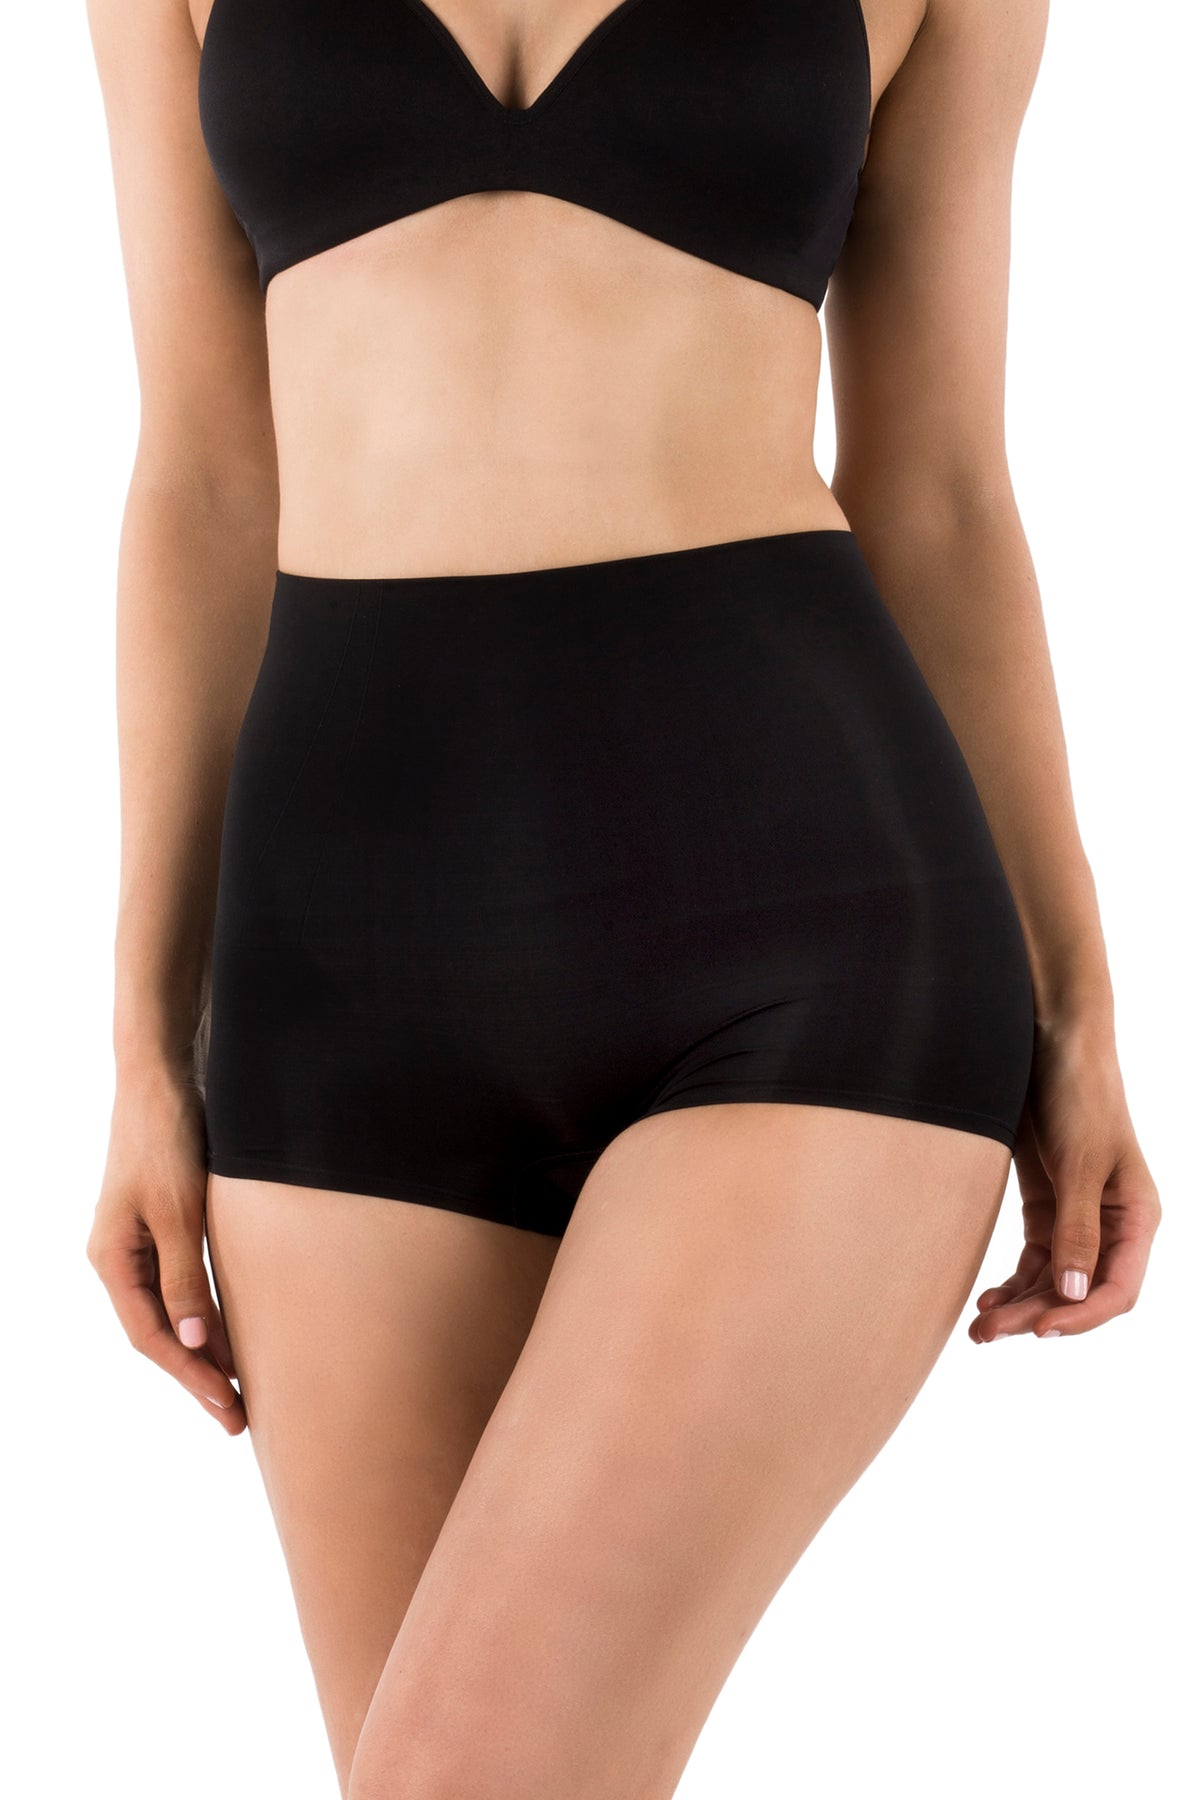 Ambra Powerlite Boyleg short Tummy Control Knickers in Black or Nude –  Simply Hosiery Online